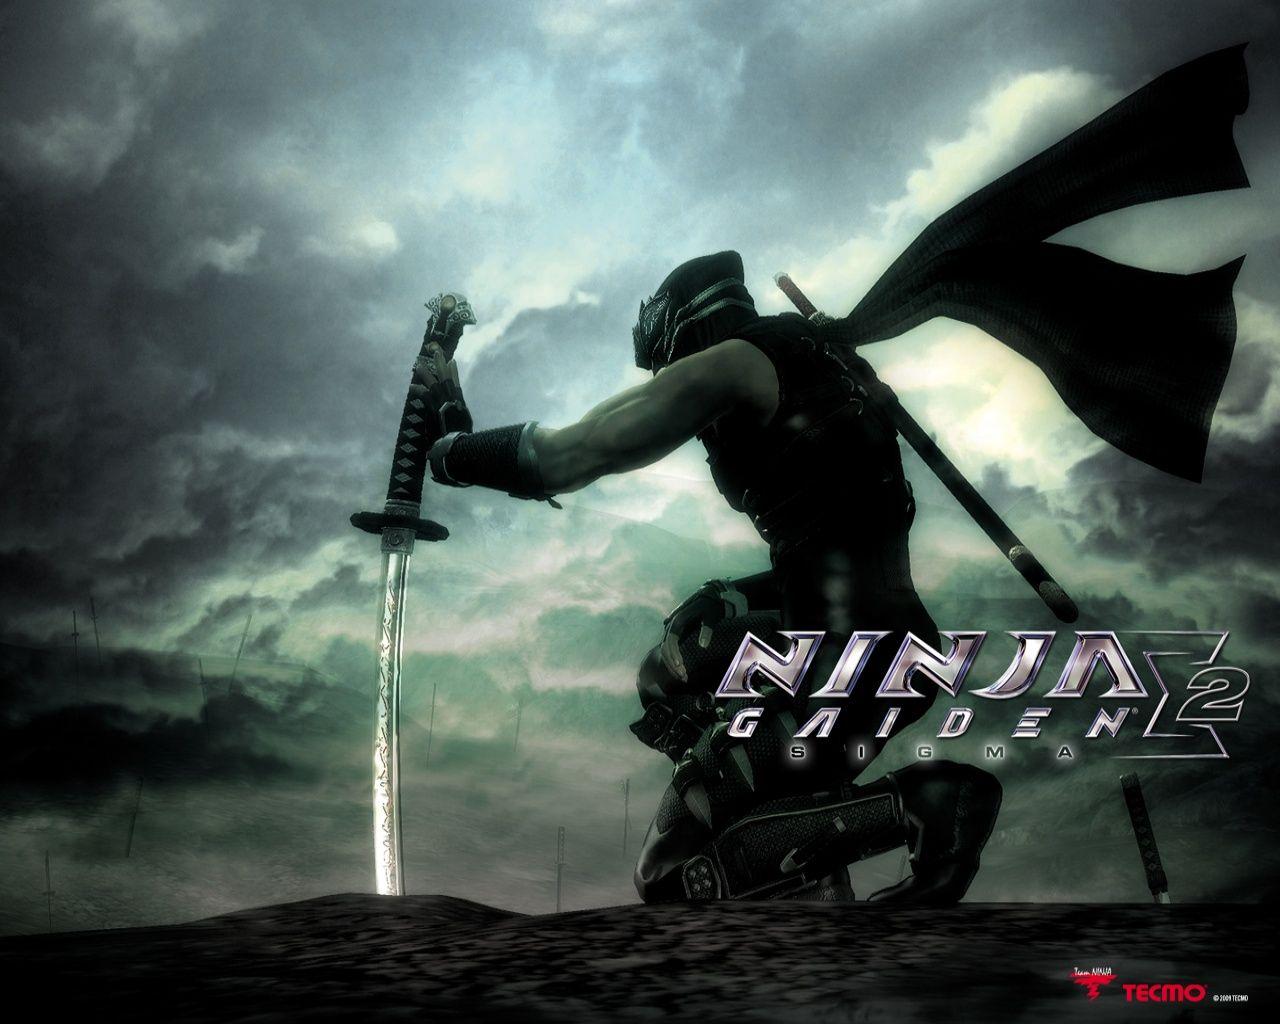 Ninja Gaiden Sigma 2 PS3 Game Wallpaper in jpg format for free download